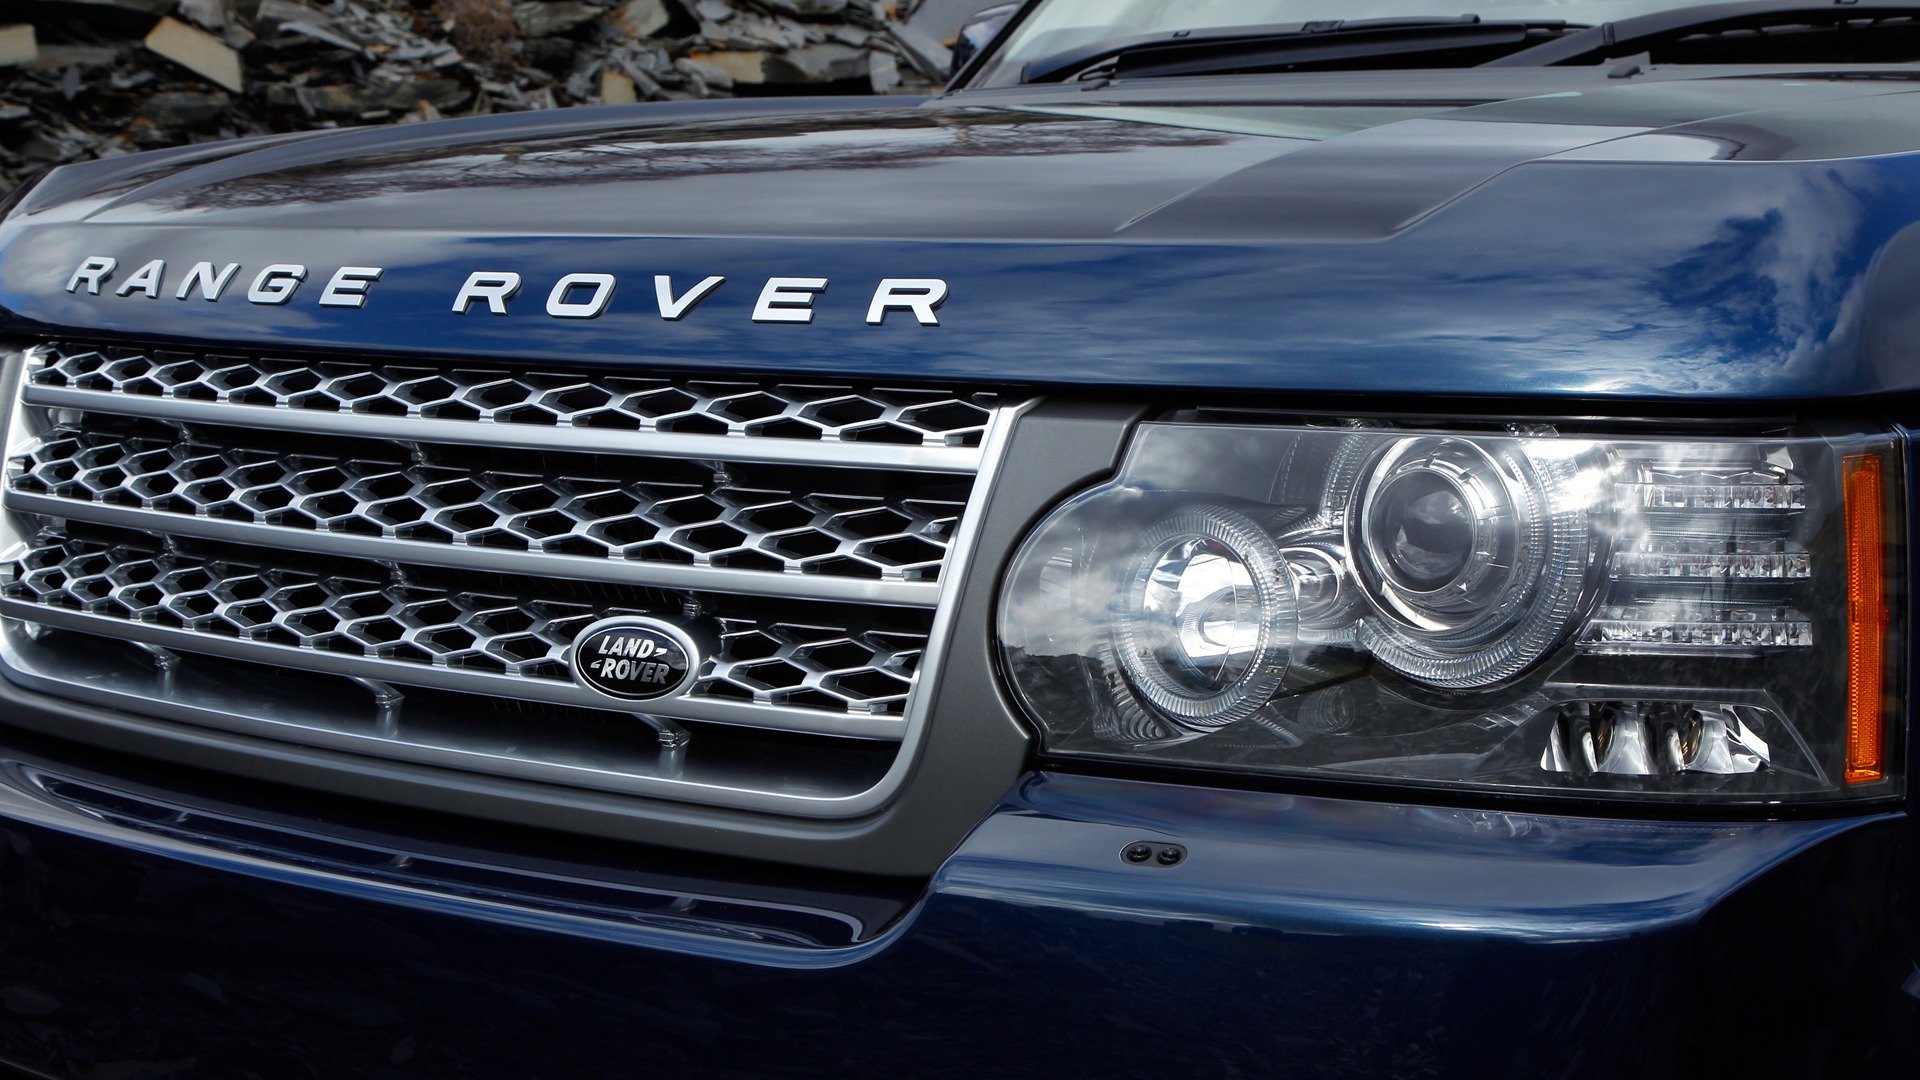 Land Rover Range Rover - 2011 路虎17 - 1920x1080